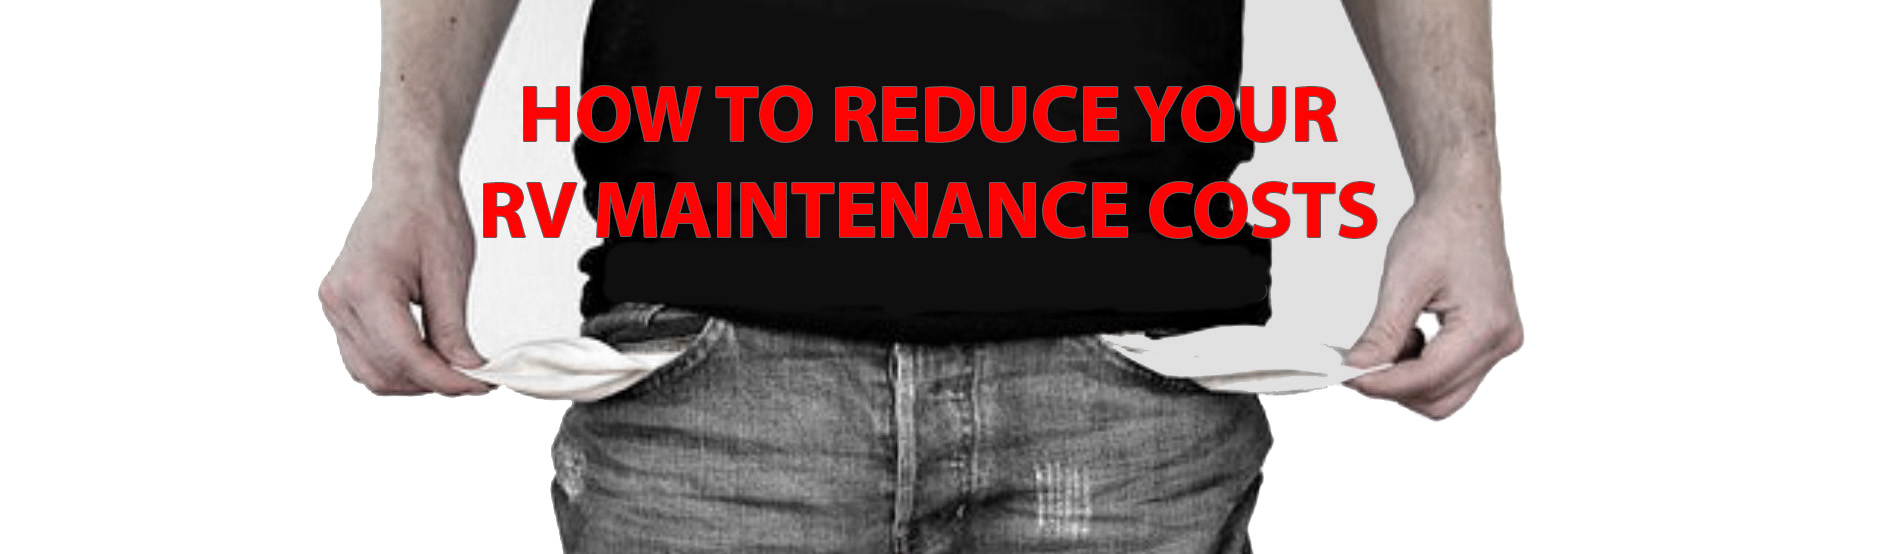 reduce rv maintenance costs